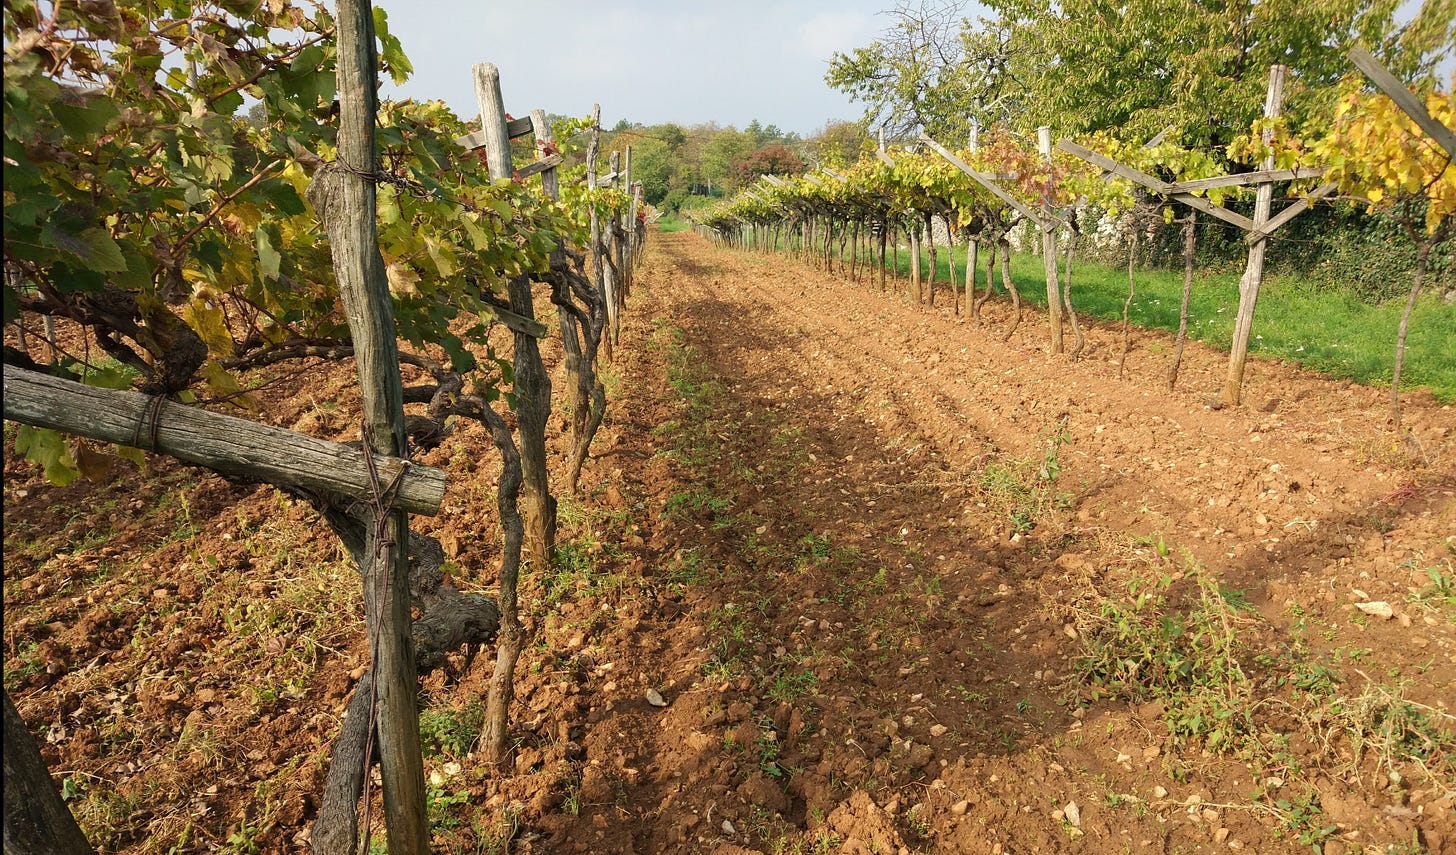 High trained Pergola vineyard at Skerlj, Carso